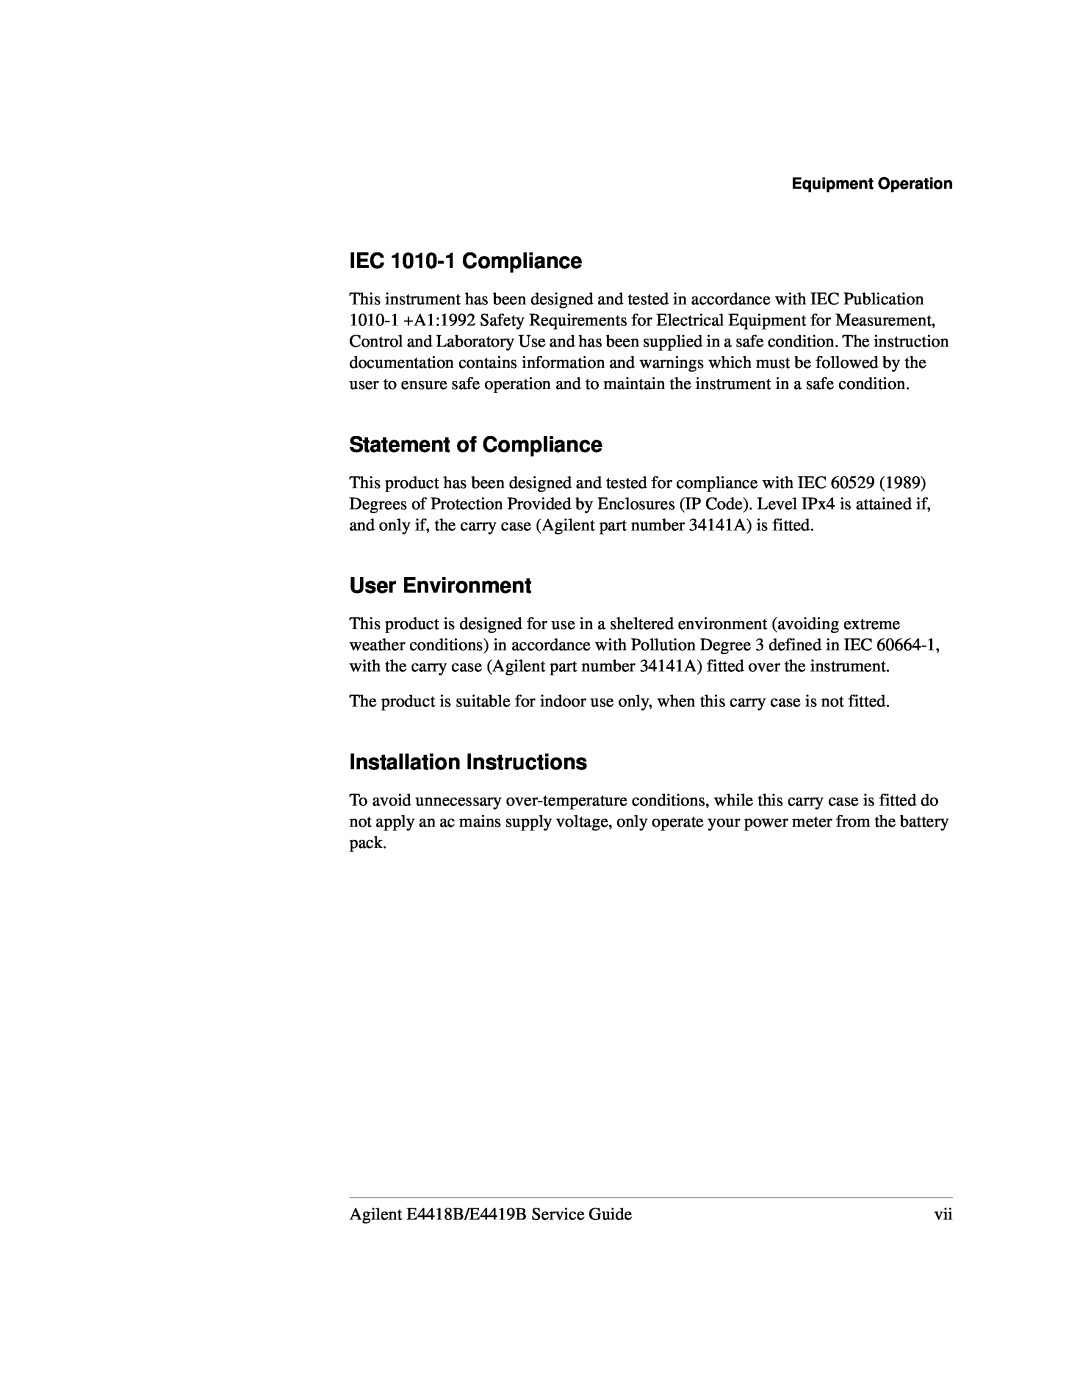 Agilent Technologies e4419b IEC 1010-1 Compliance, Statement of Compliance, User Environment, Installation Instructions 